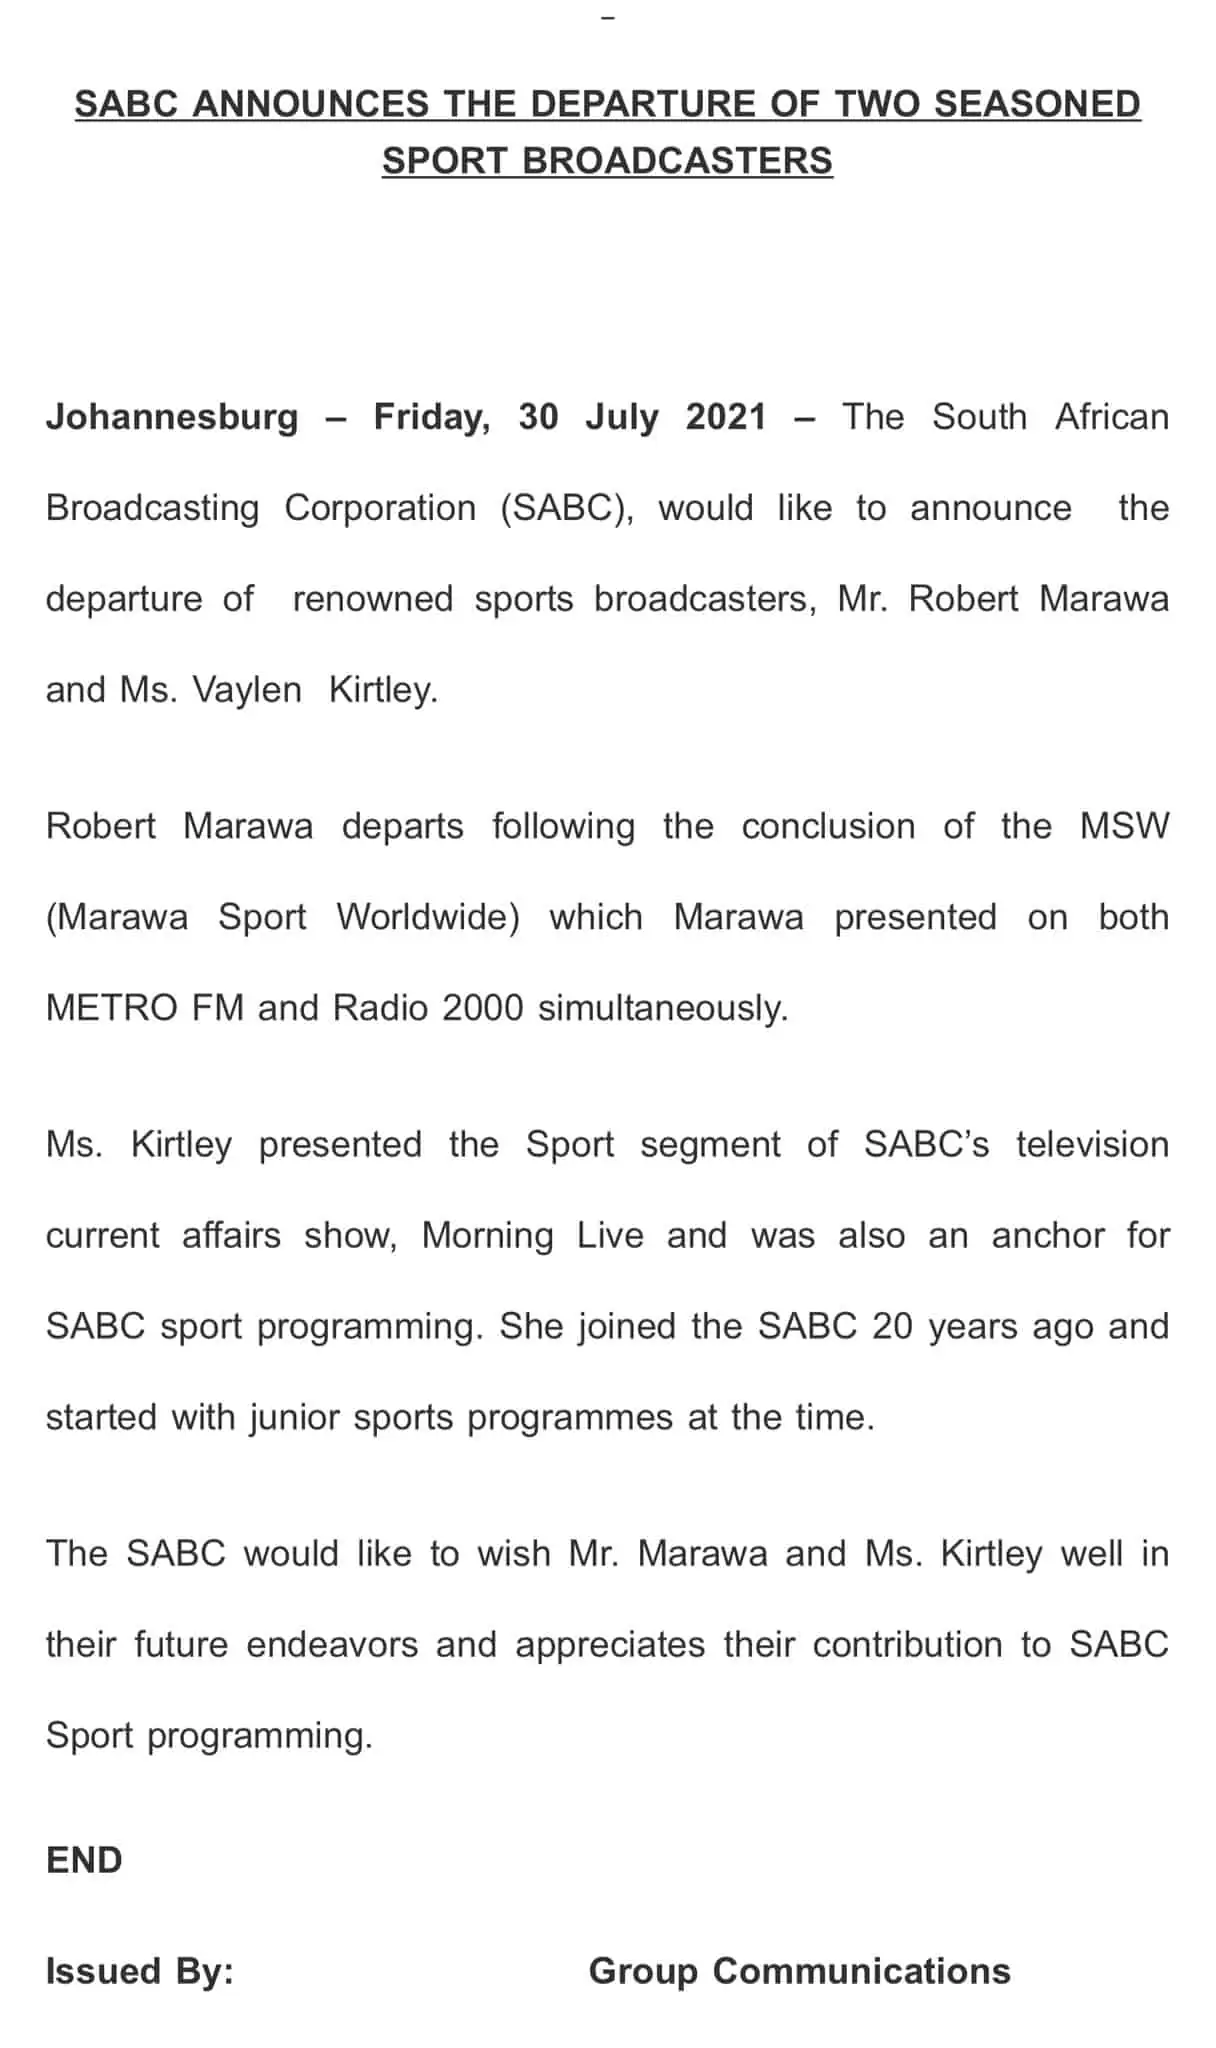 How Robert Marawa got axed from SABC, EntertainmentSA News South Africa